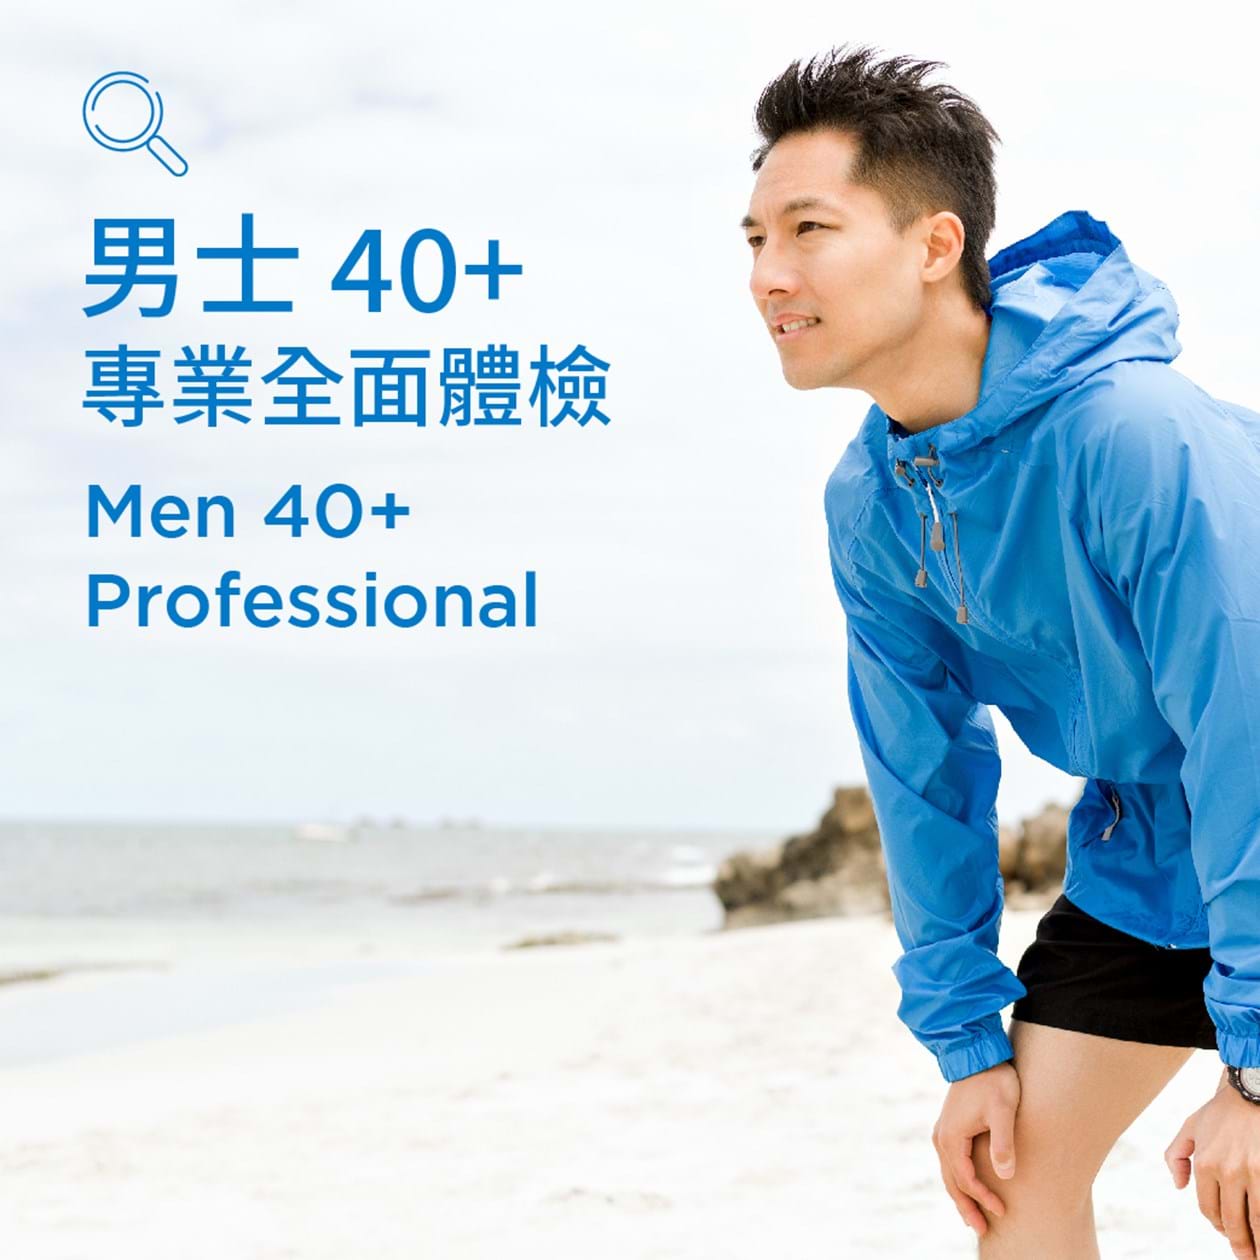 Men 40+ (Professional)